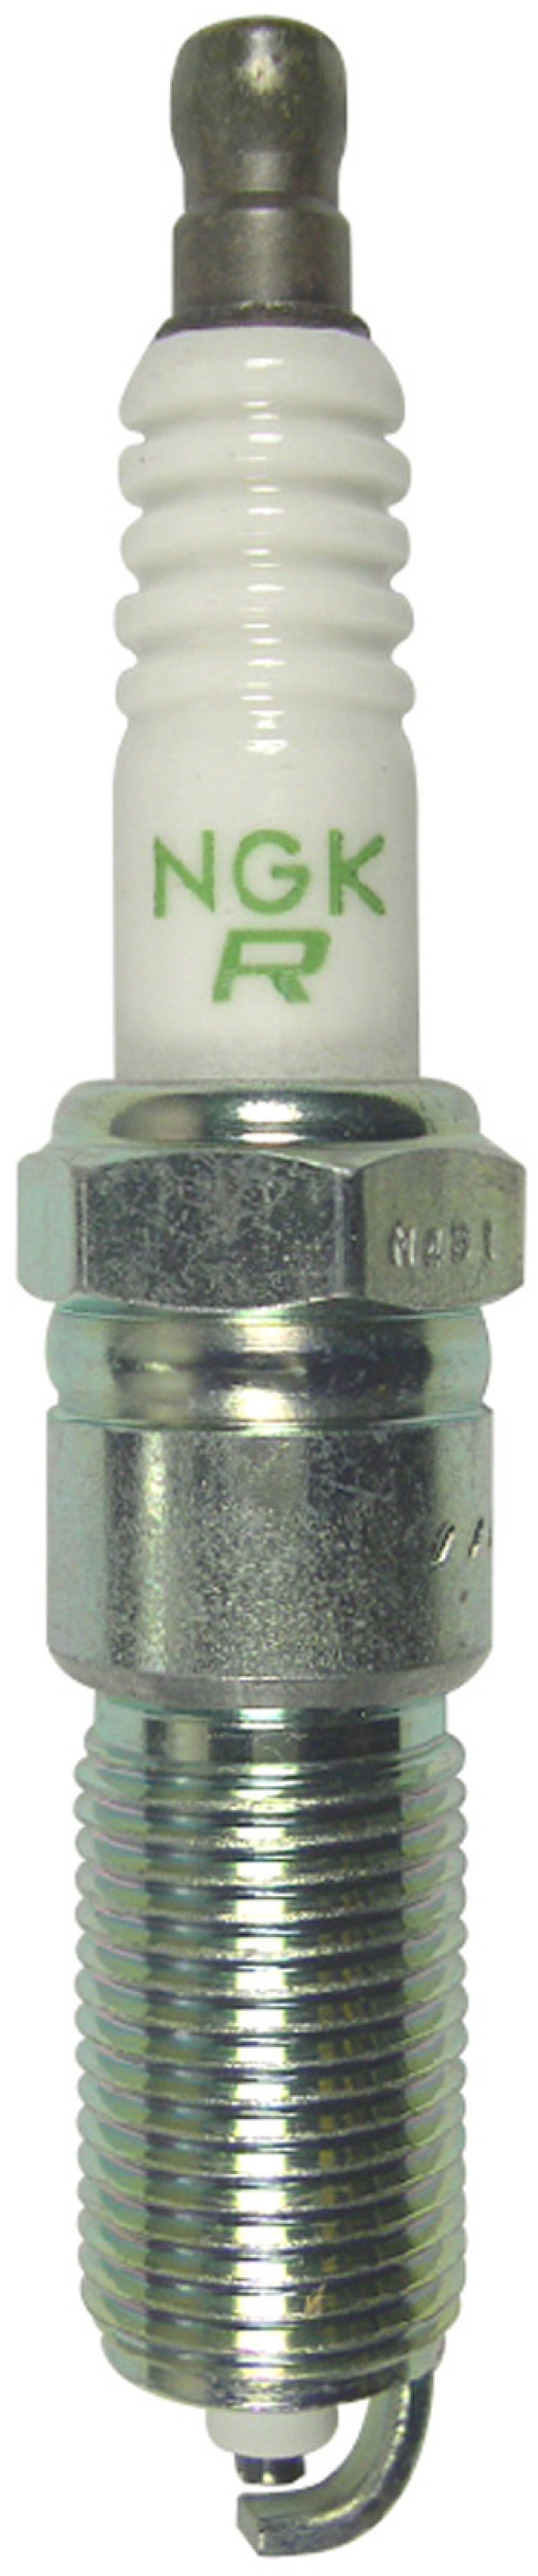 NGK Nickel Spark Plug Box of 4 (LZTR4A-11) - 5306